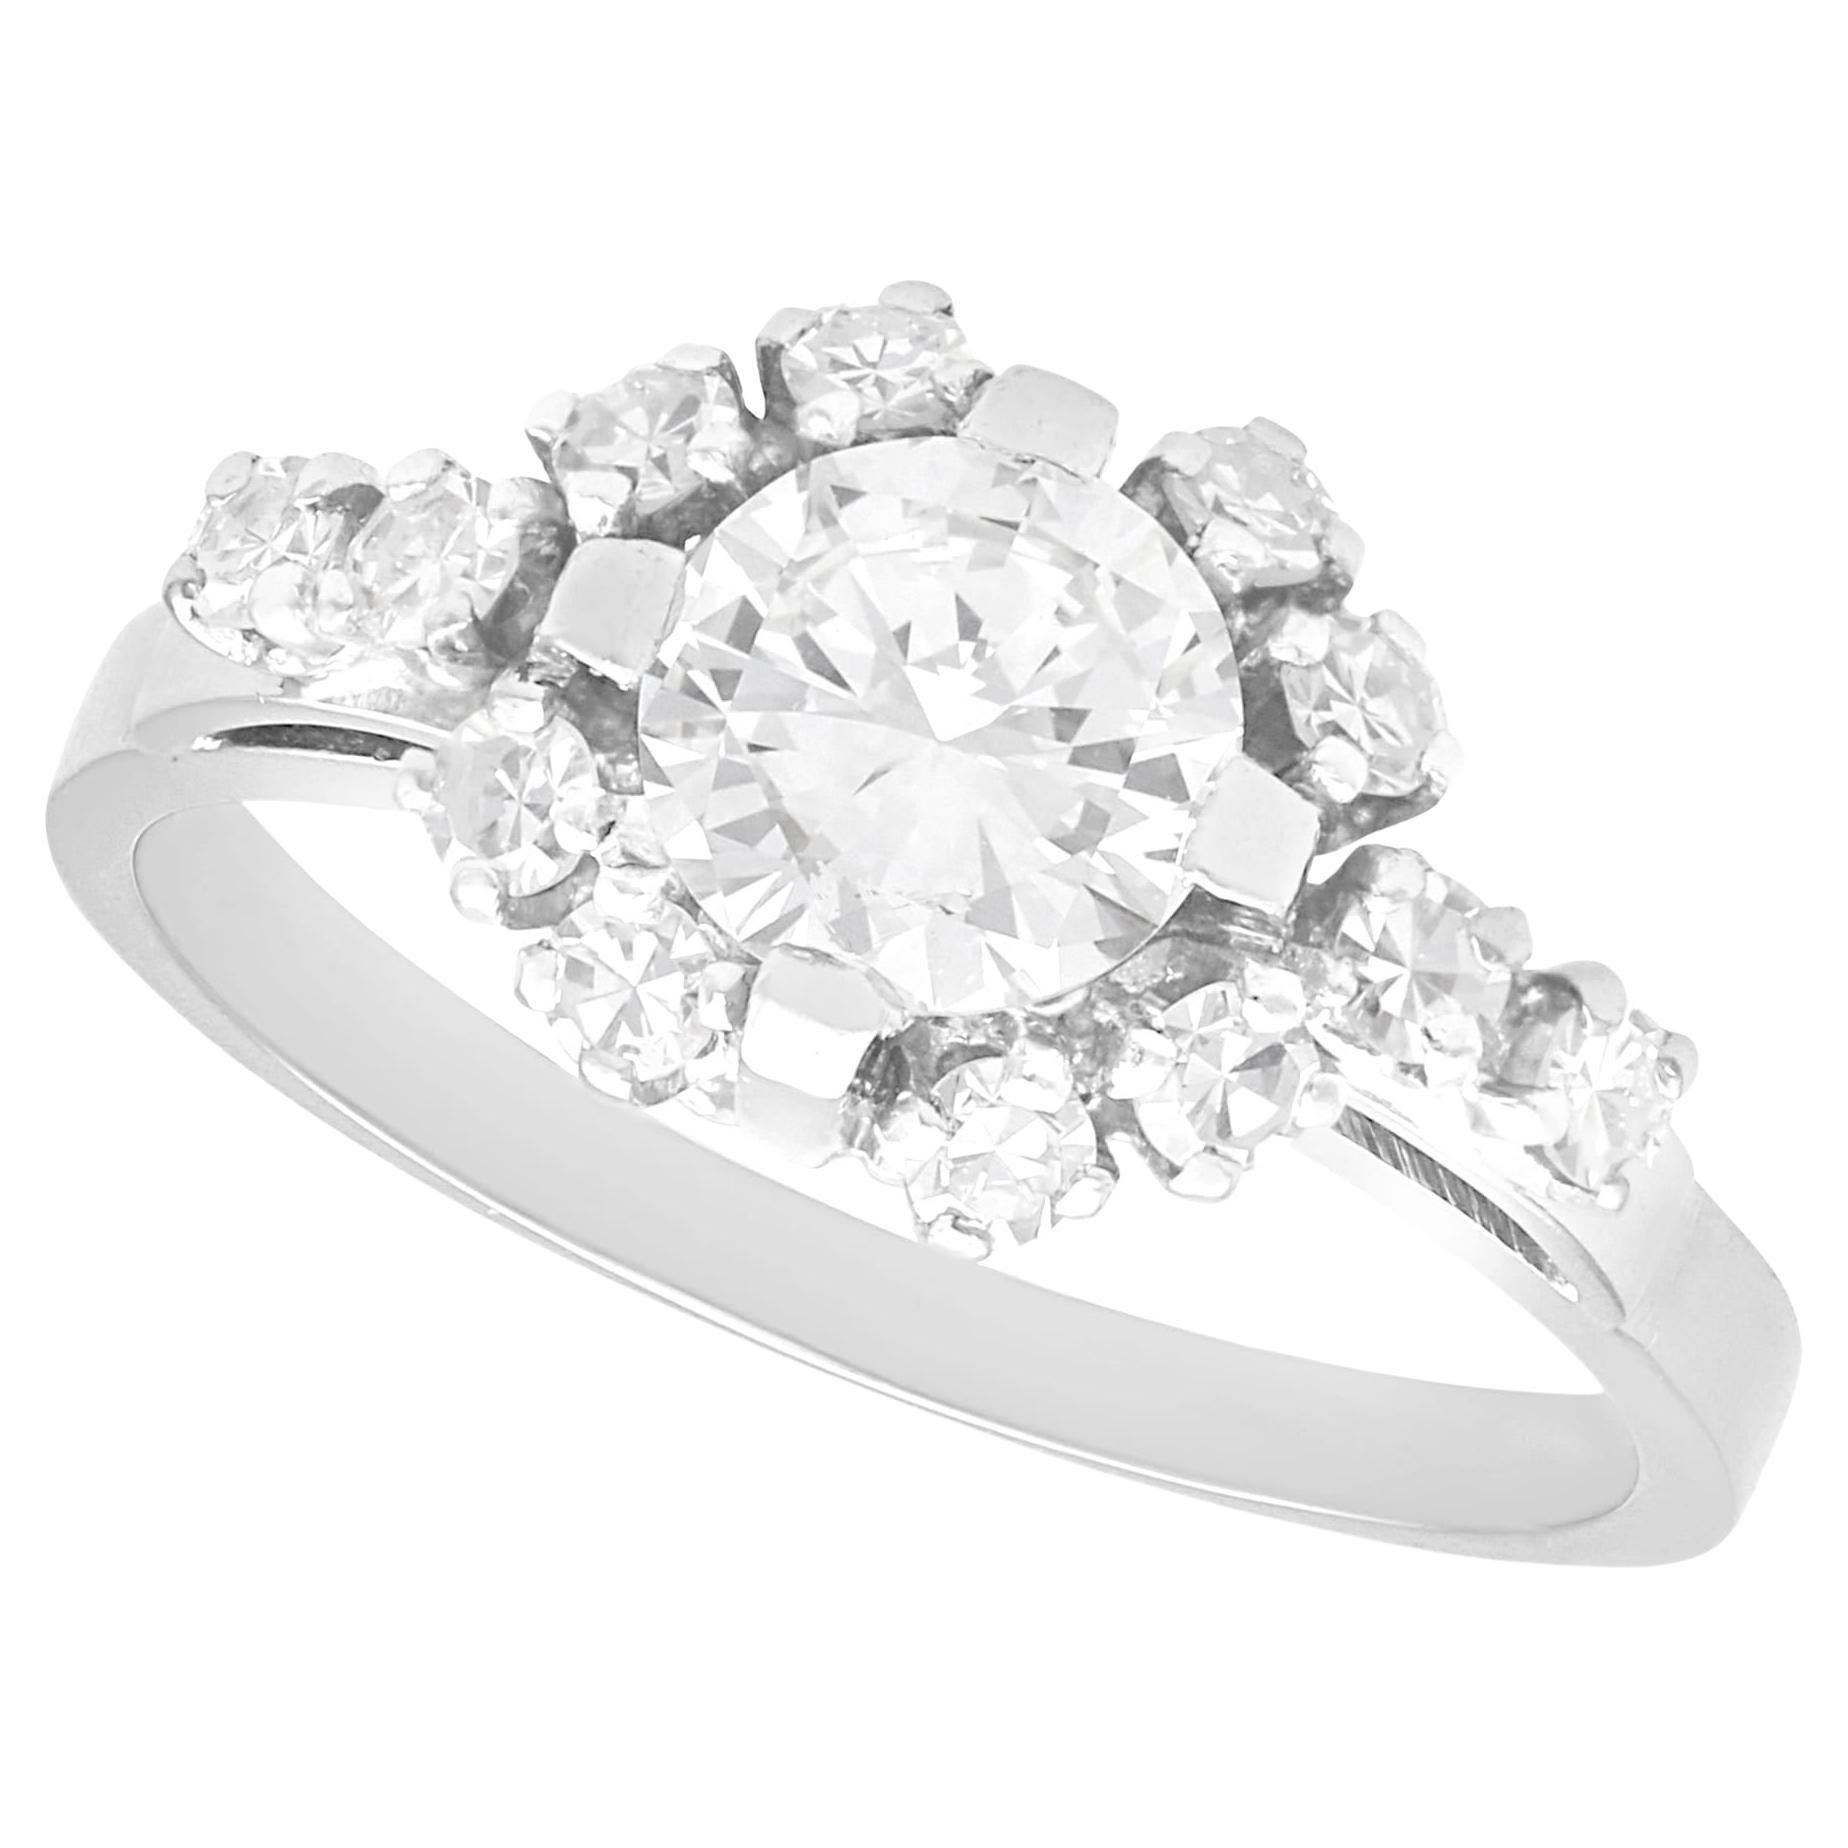 Vintage 1.09 Carat Diamond and 18k White Gold Cluster Ring